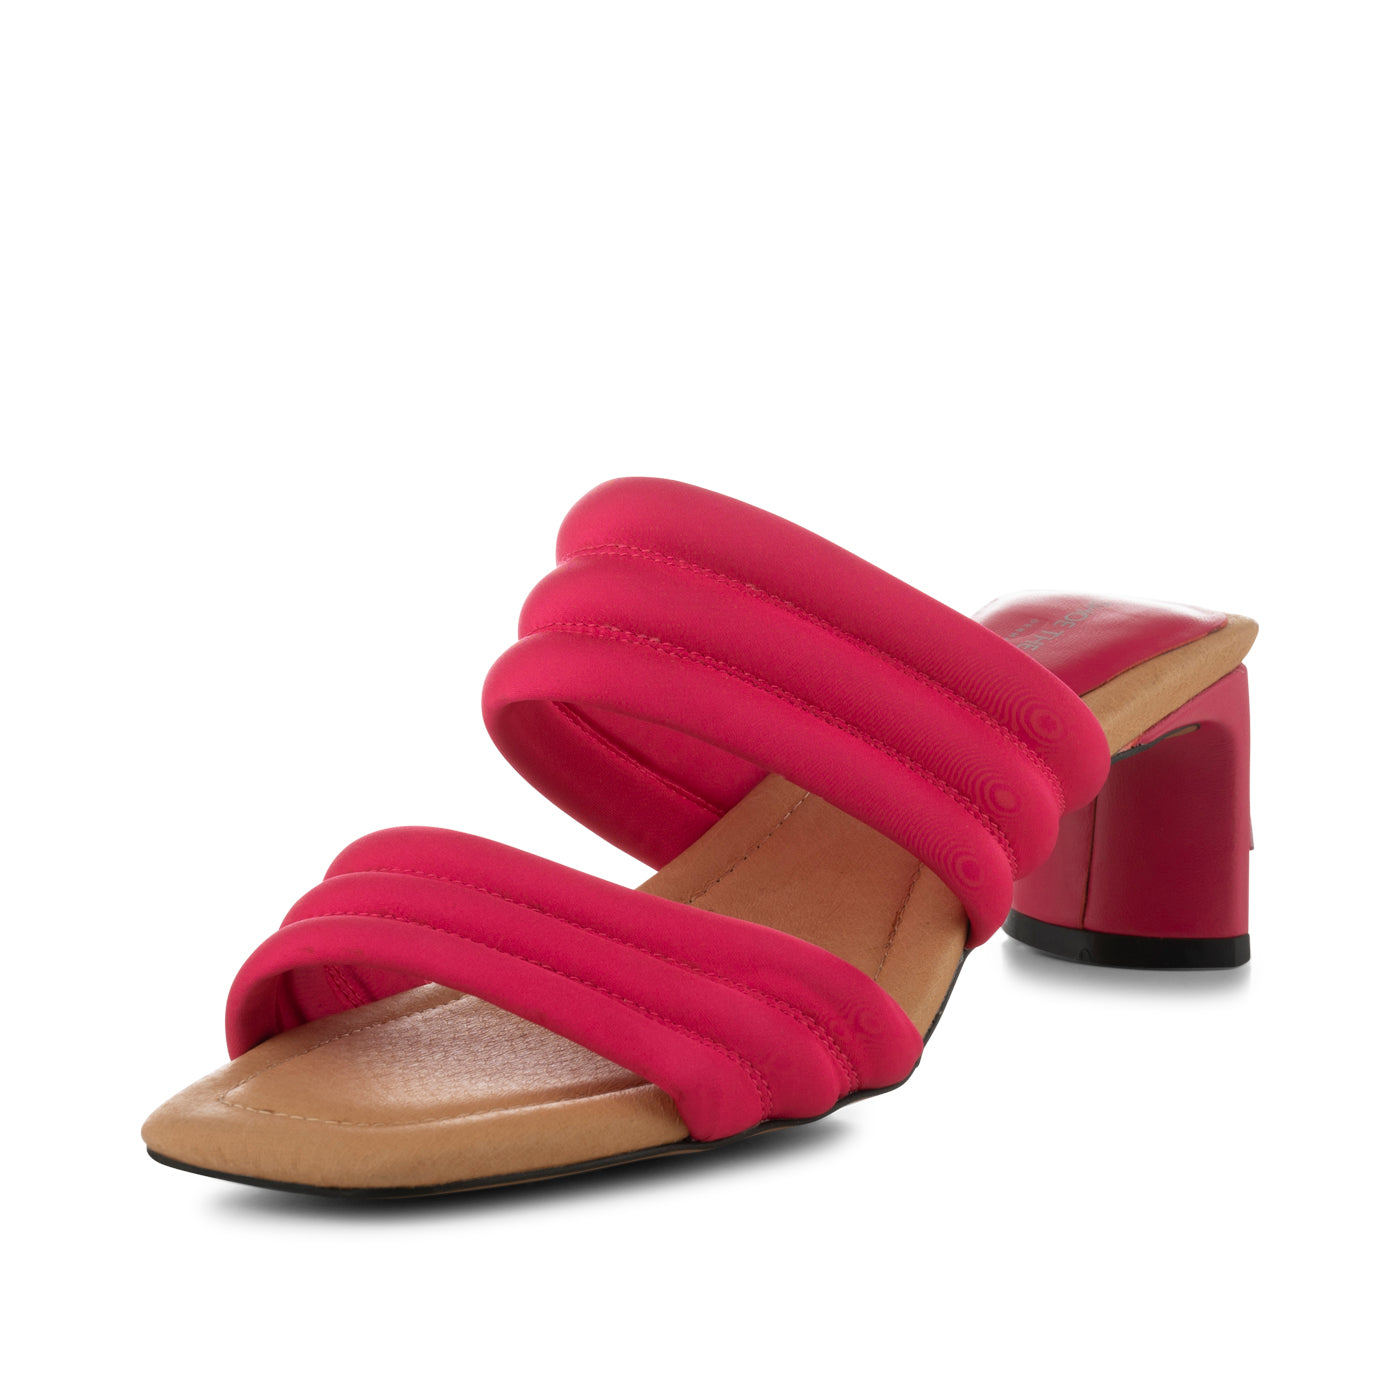 SHOE THE BEAR WOMENS Sylvi heel textile Heel Sandals 868 PINK SATIN